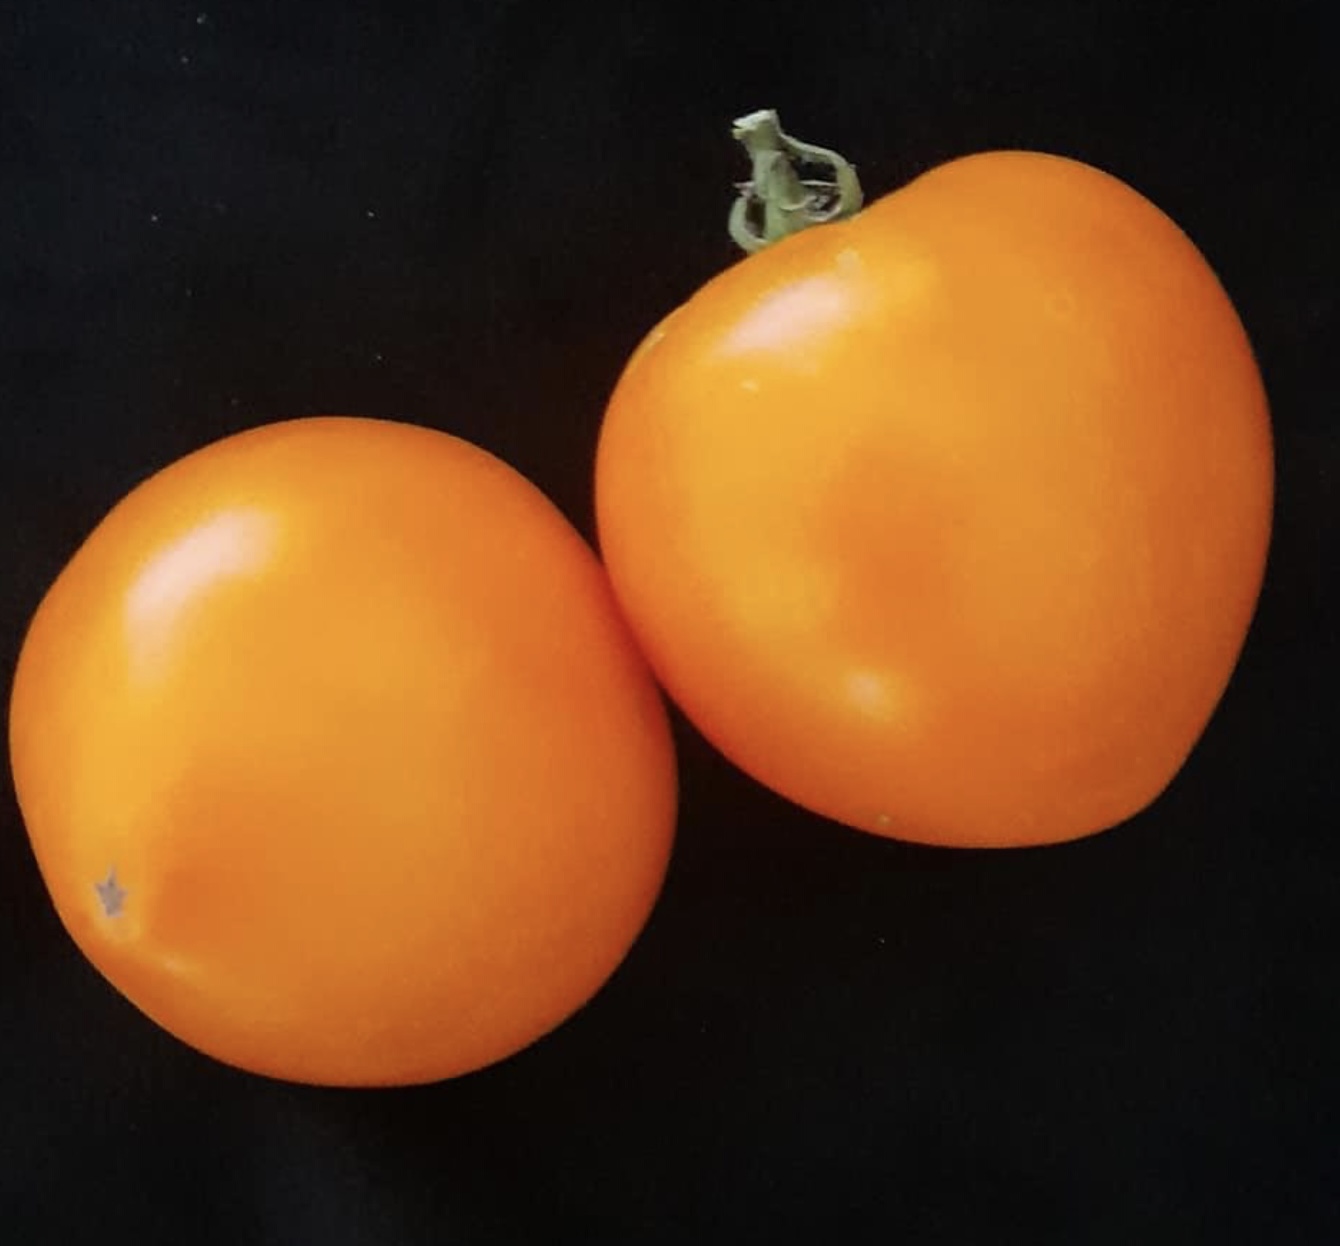 Amish Gold Slicer Tomato-Meraki Seeds